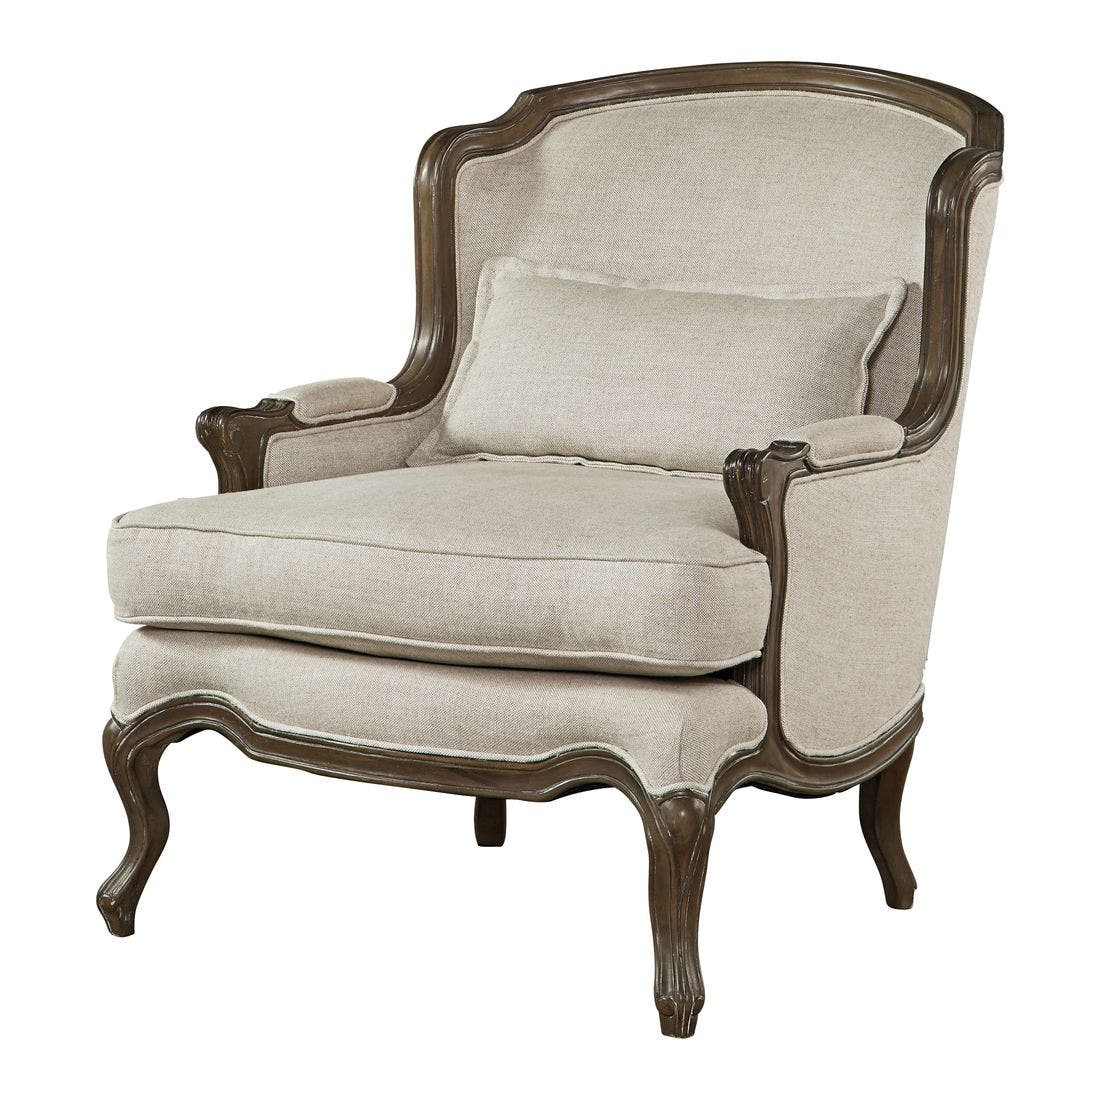 19134588-537505-100-furniture-sofa-recliner-armchair-01